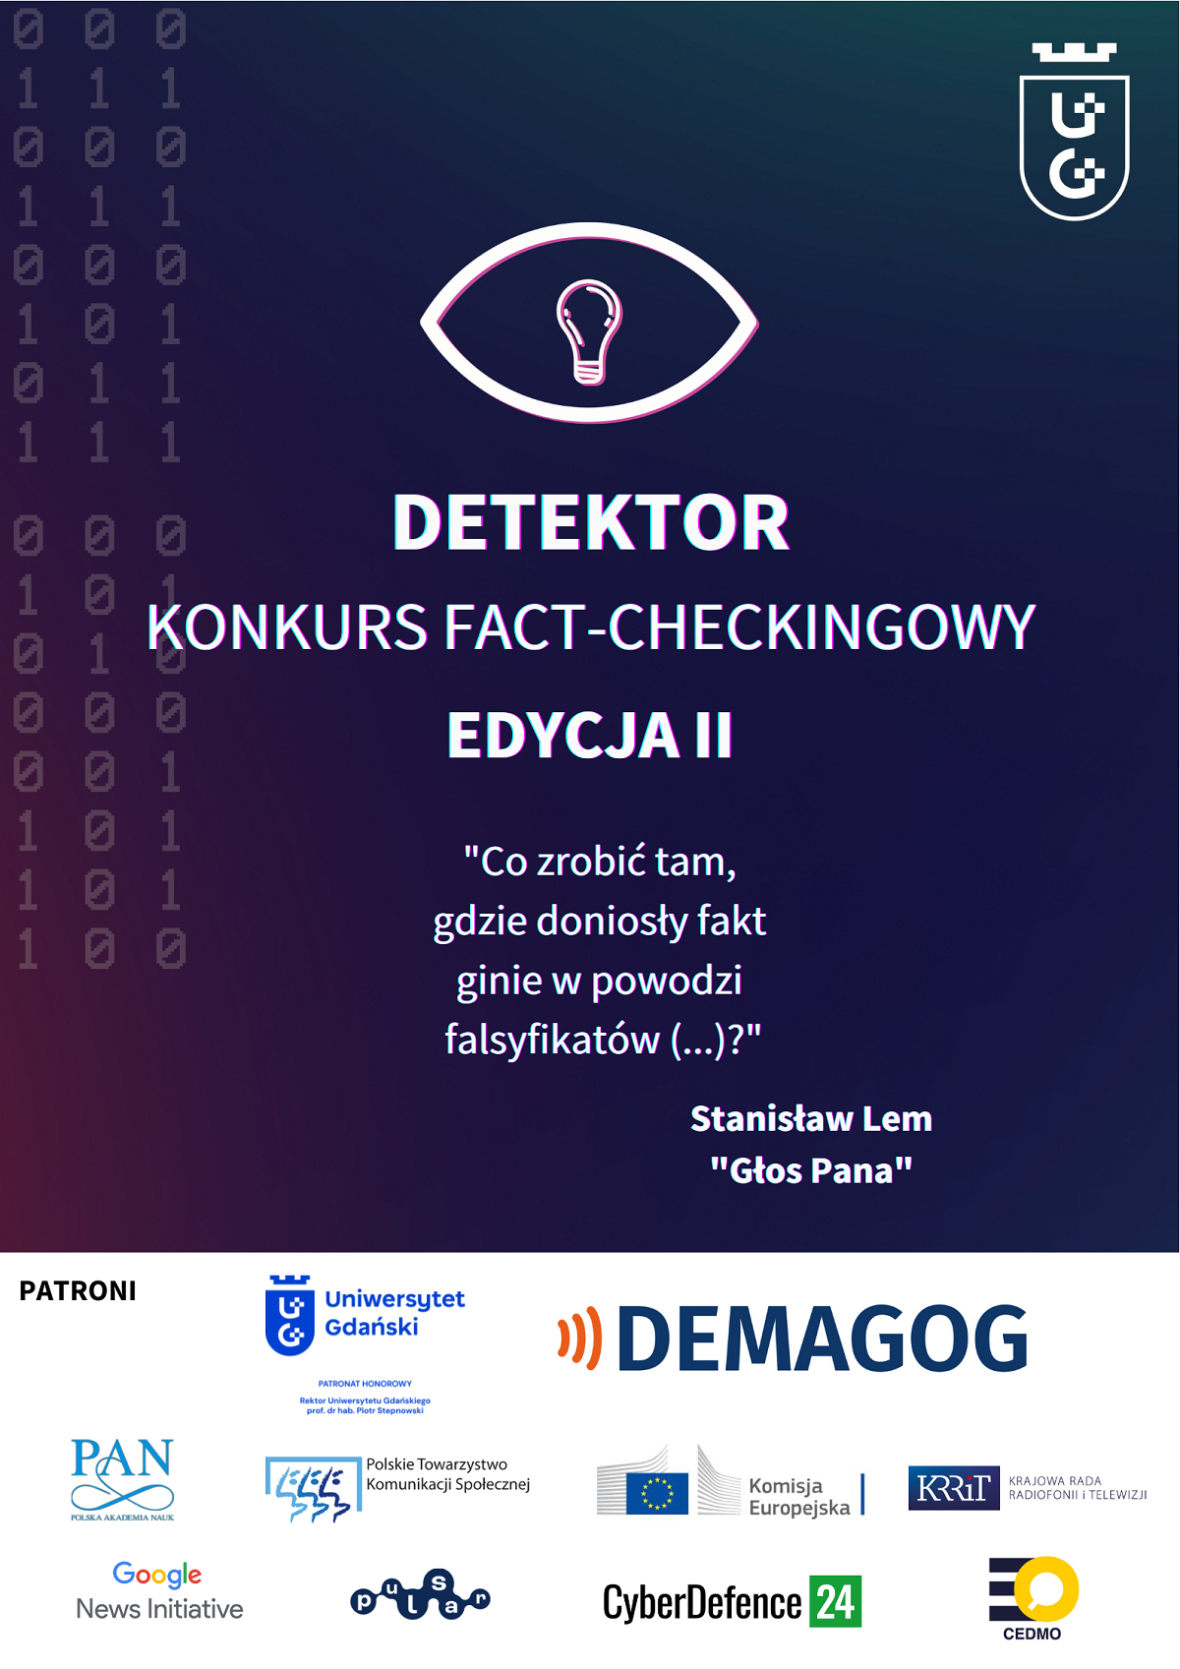 Rusza konkurs fact-checkingowy Detektor